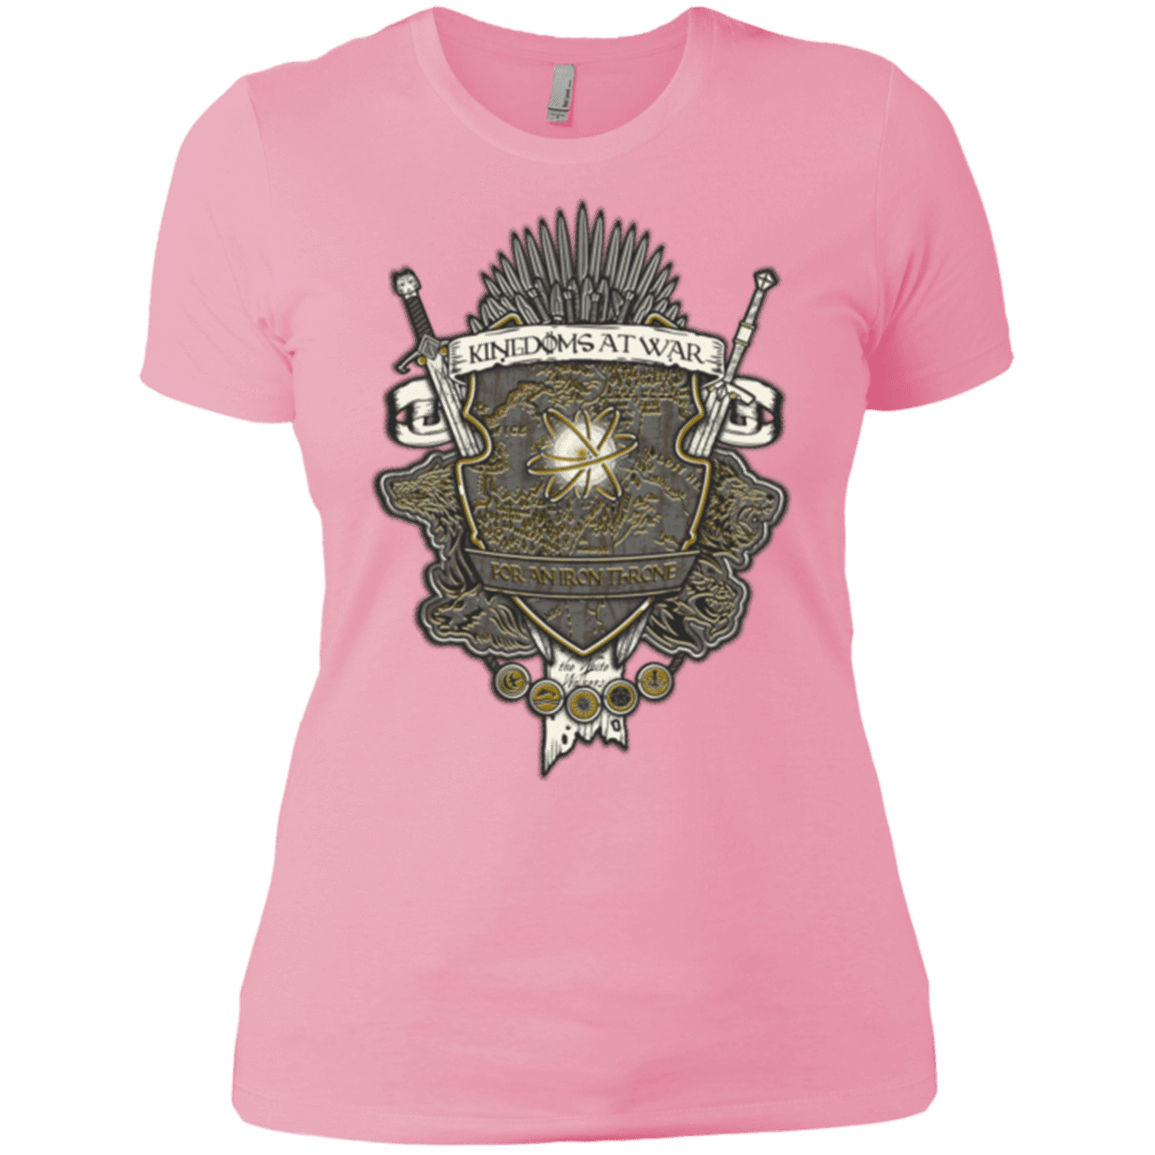 T-Shirts Light Pink / X-Small Crest of Thrones Women's Premium T-Shirt